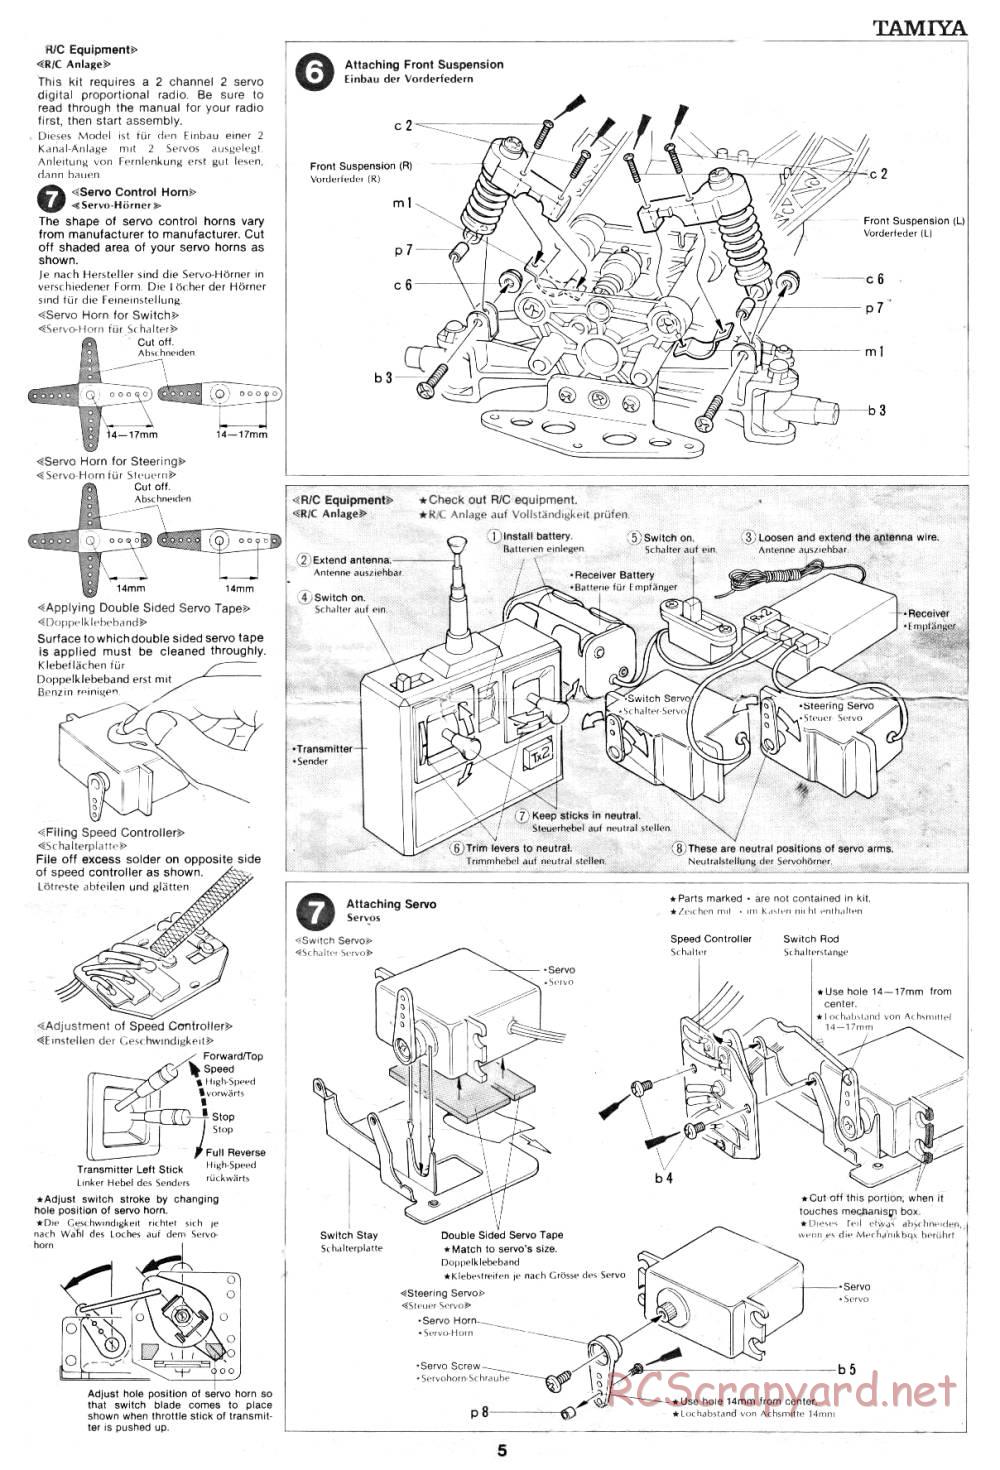 Tamiya - Audi Quattro Rally - 58036 - Manual - Page 5